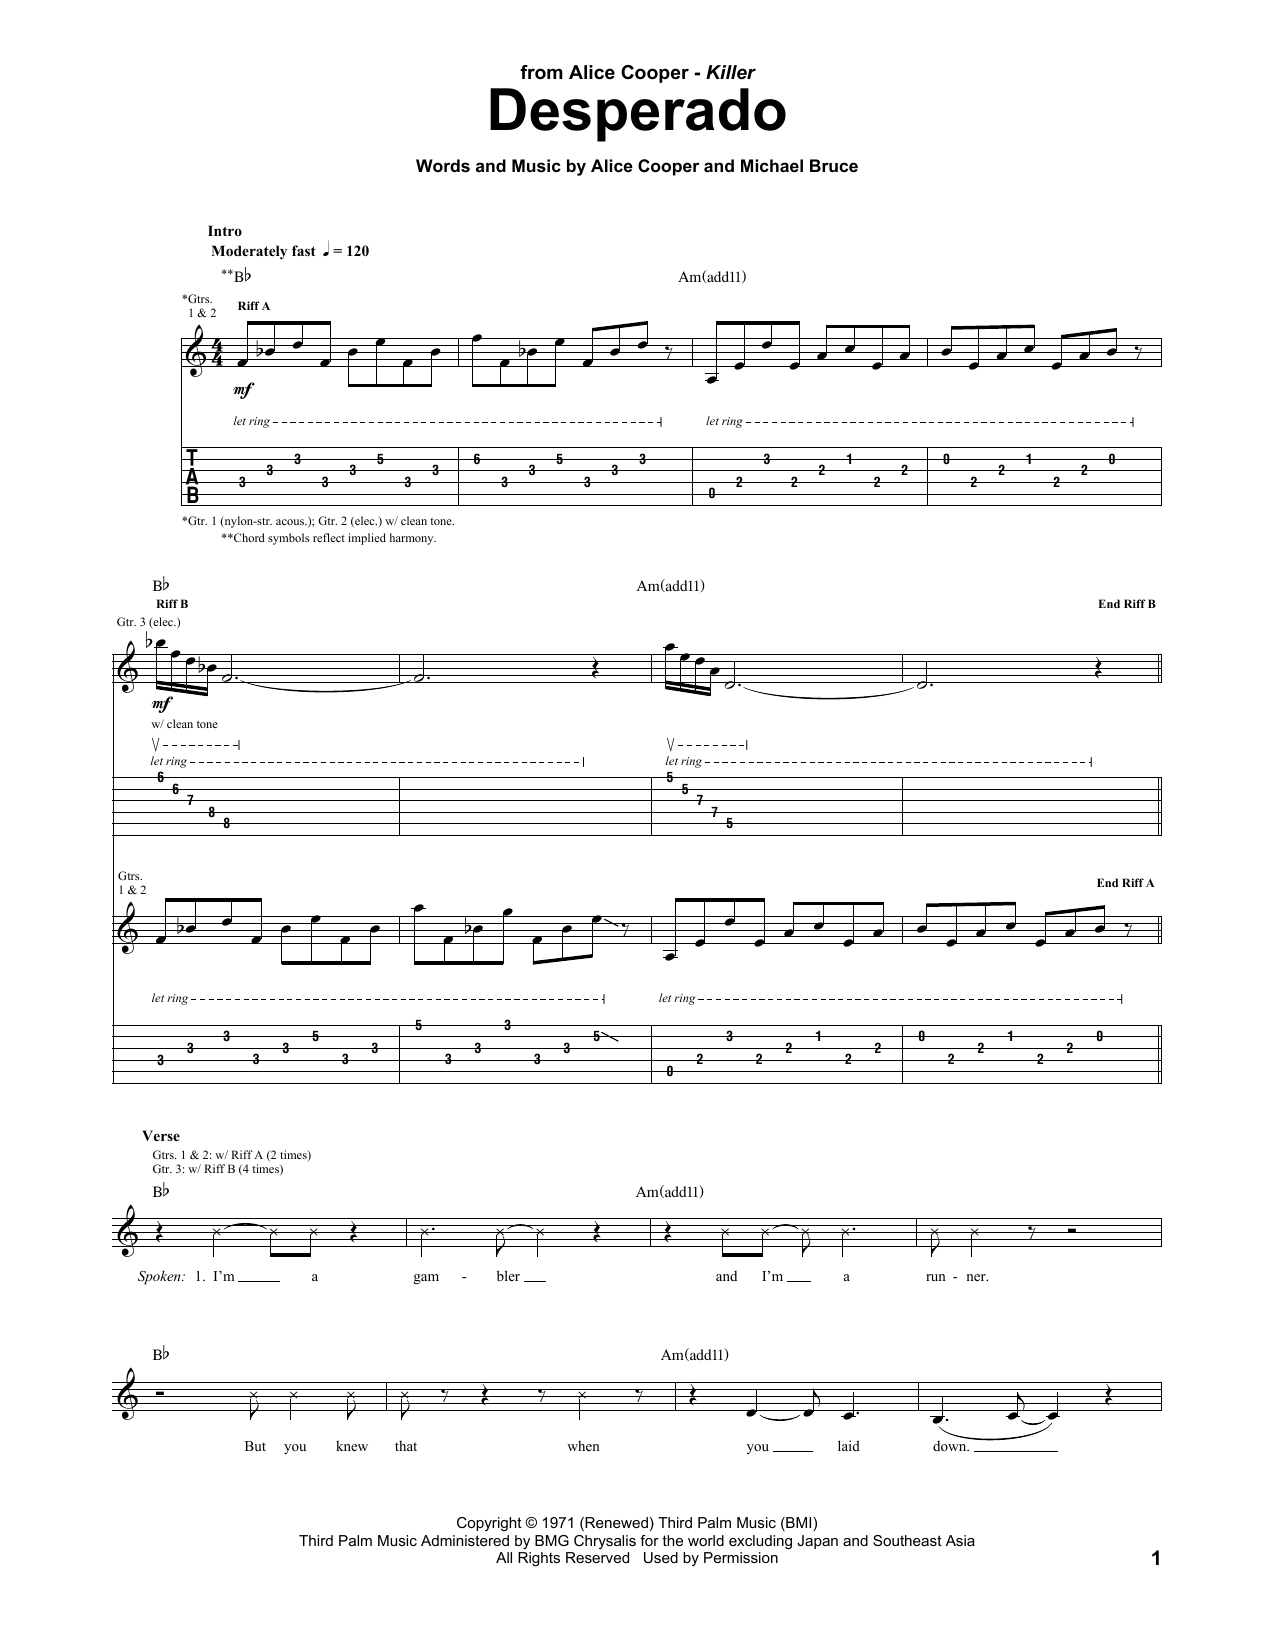 Alice Cooper Desperado Sheet Music Notes & Chords for Guitar Tab - Download or Print PDF